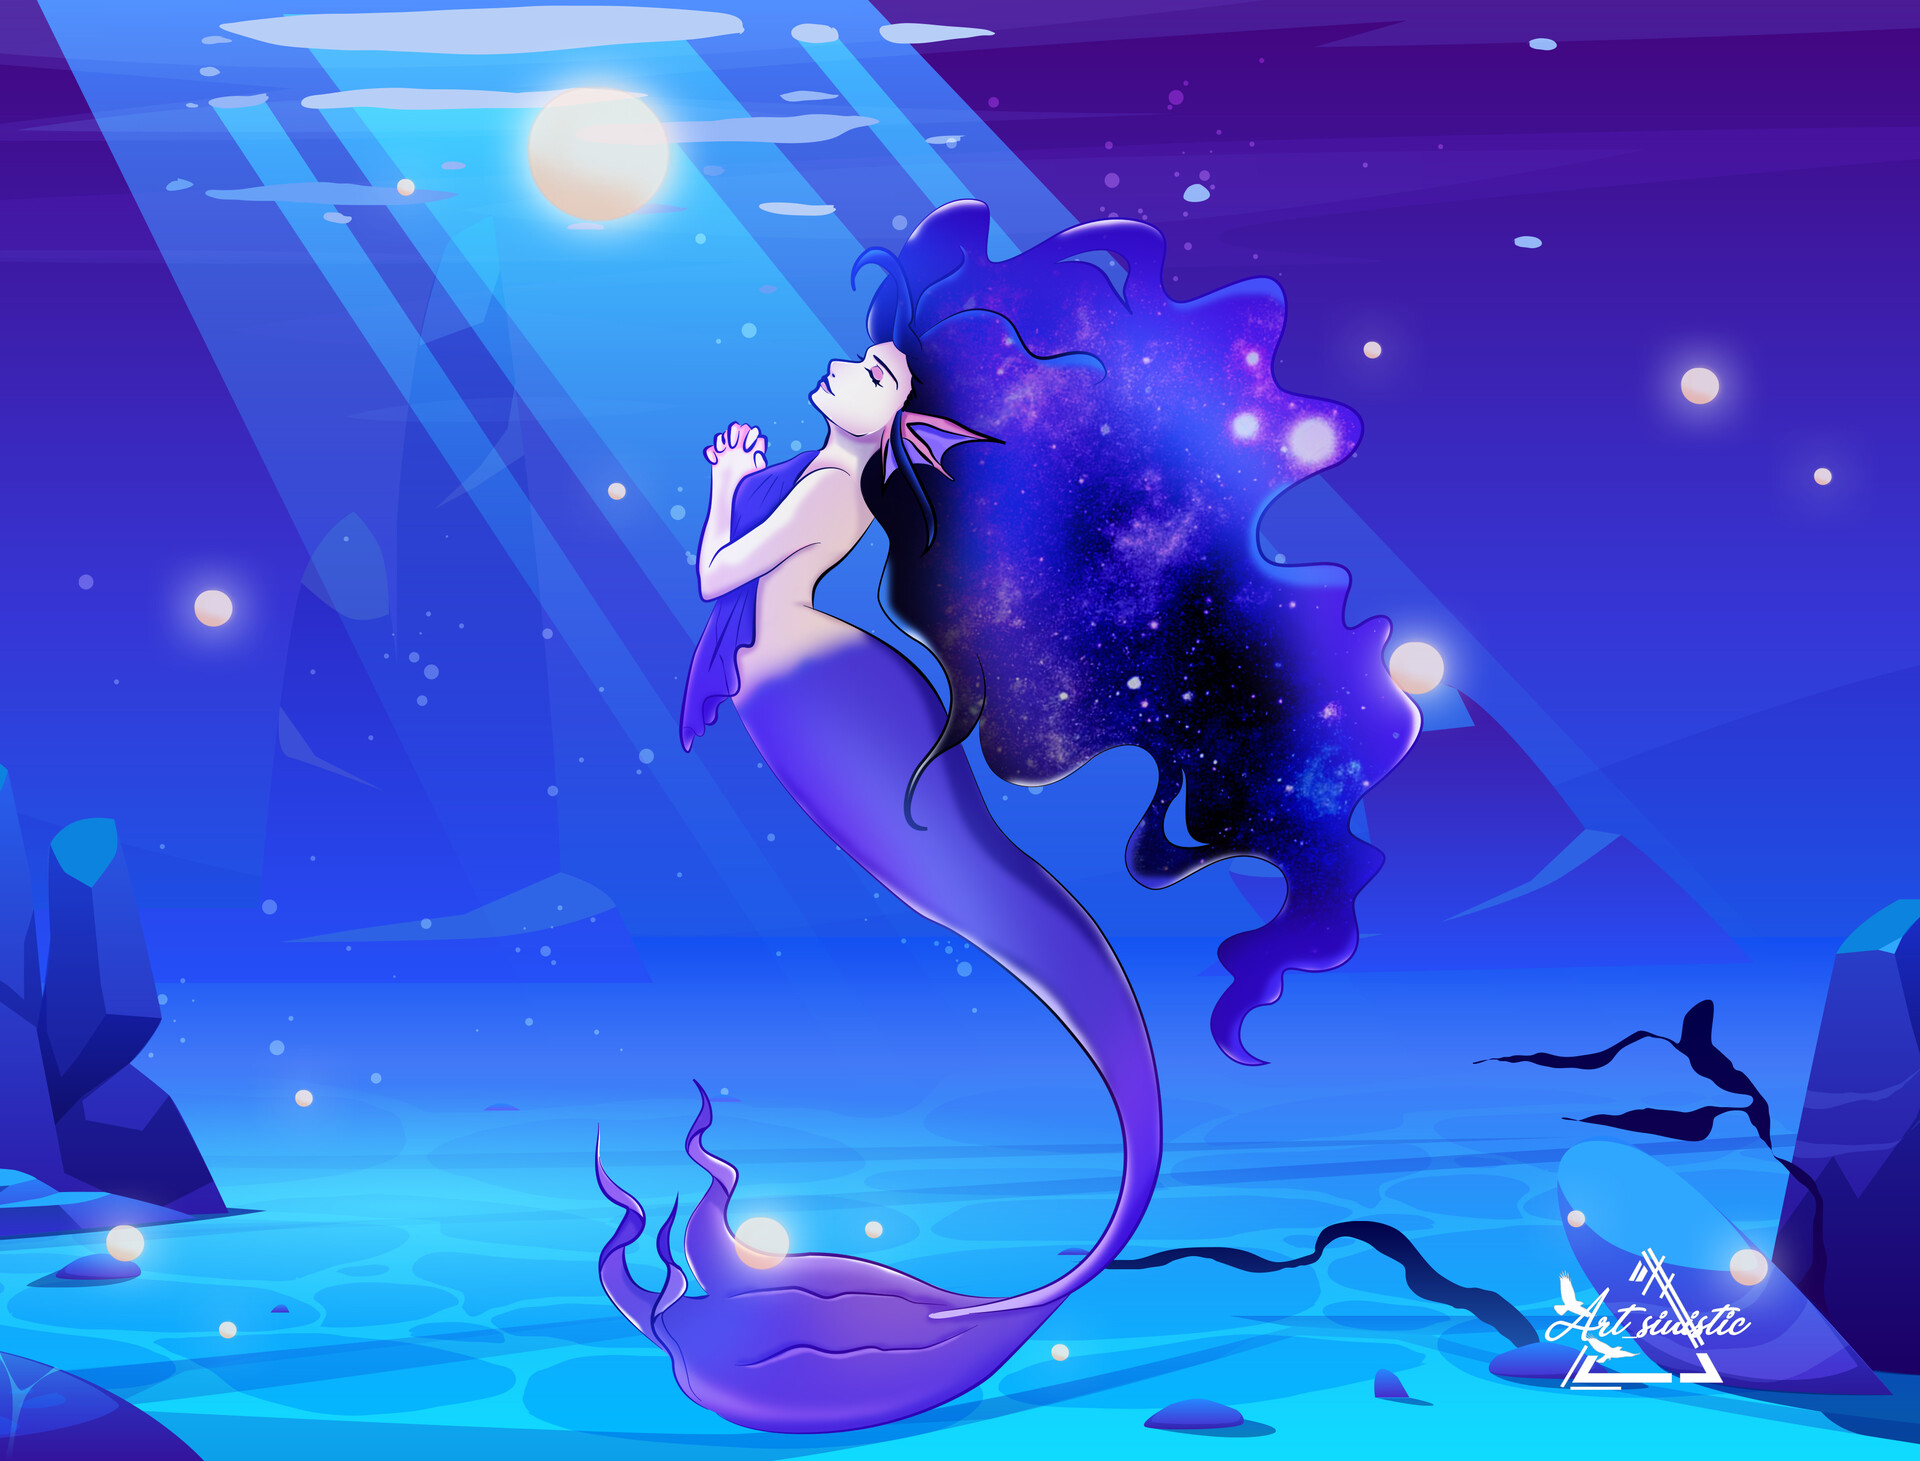 ArtStation - The mermaid